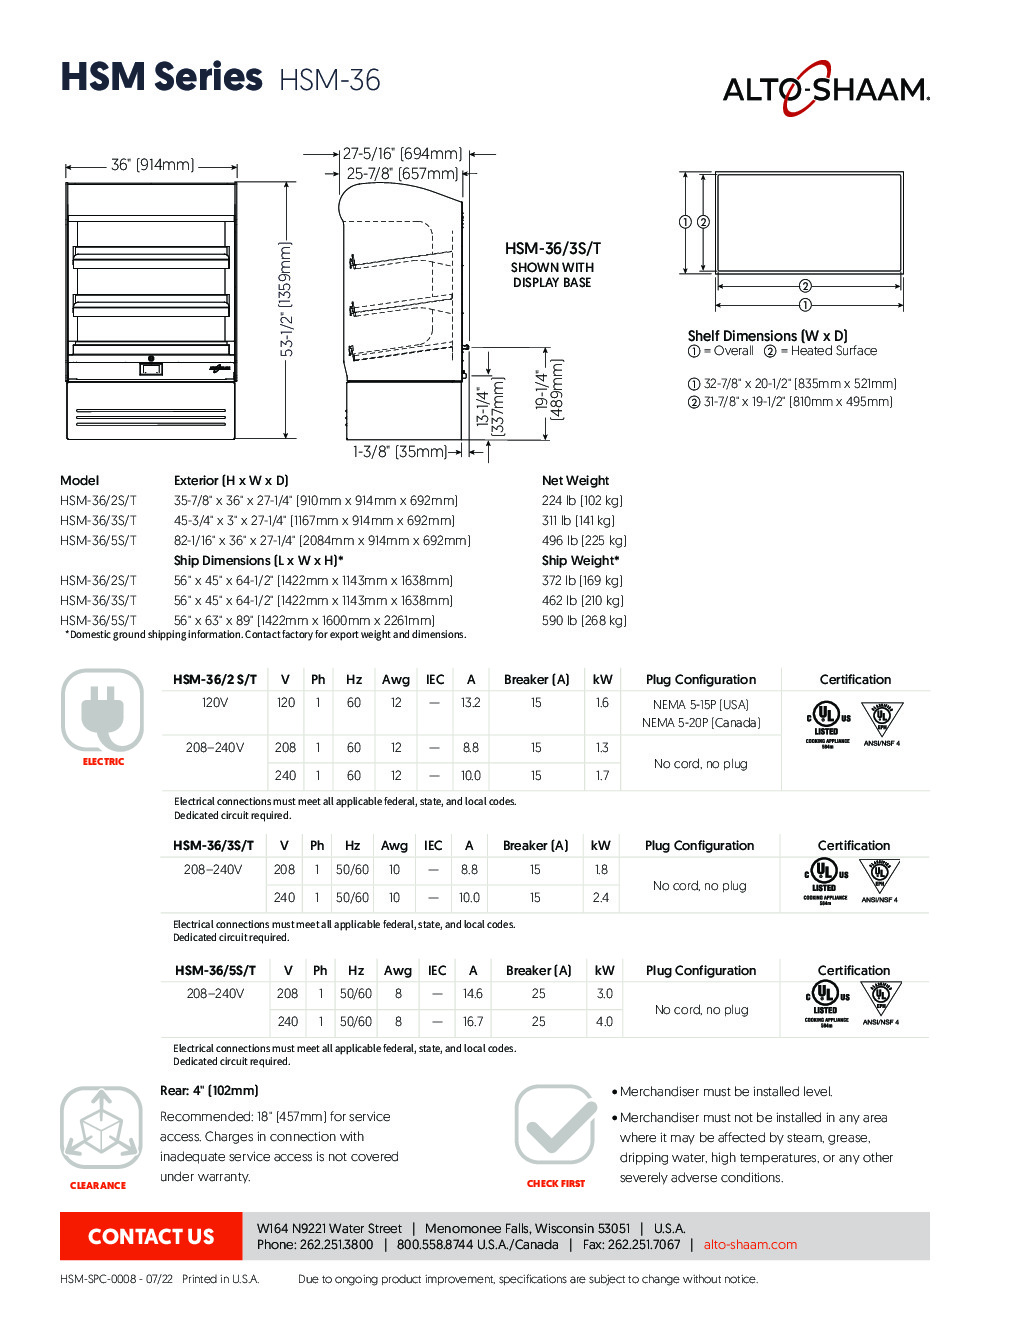 Alto-Shaam HSM-36/2S/T Countertop Hot Food Display Case